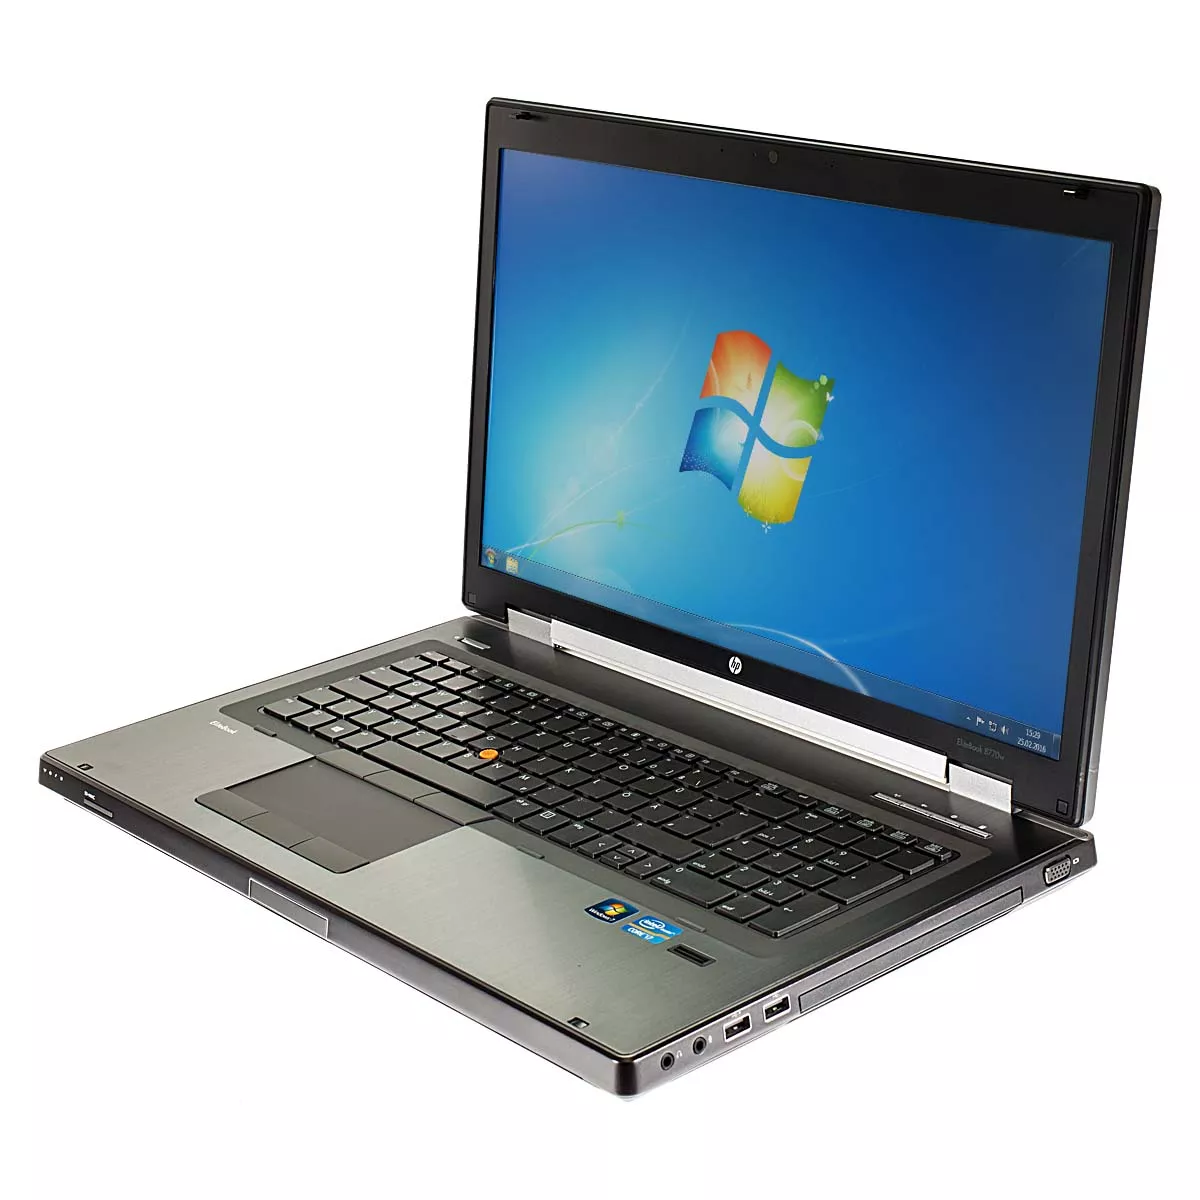 HP Elitebook 8760w Core i7 2670QM nVidia Quadro 3000M 8 GB 500 GB HDD Webcam